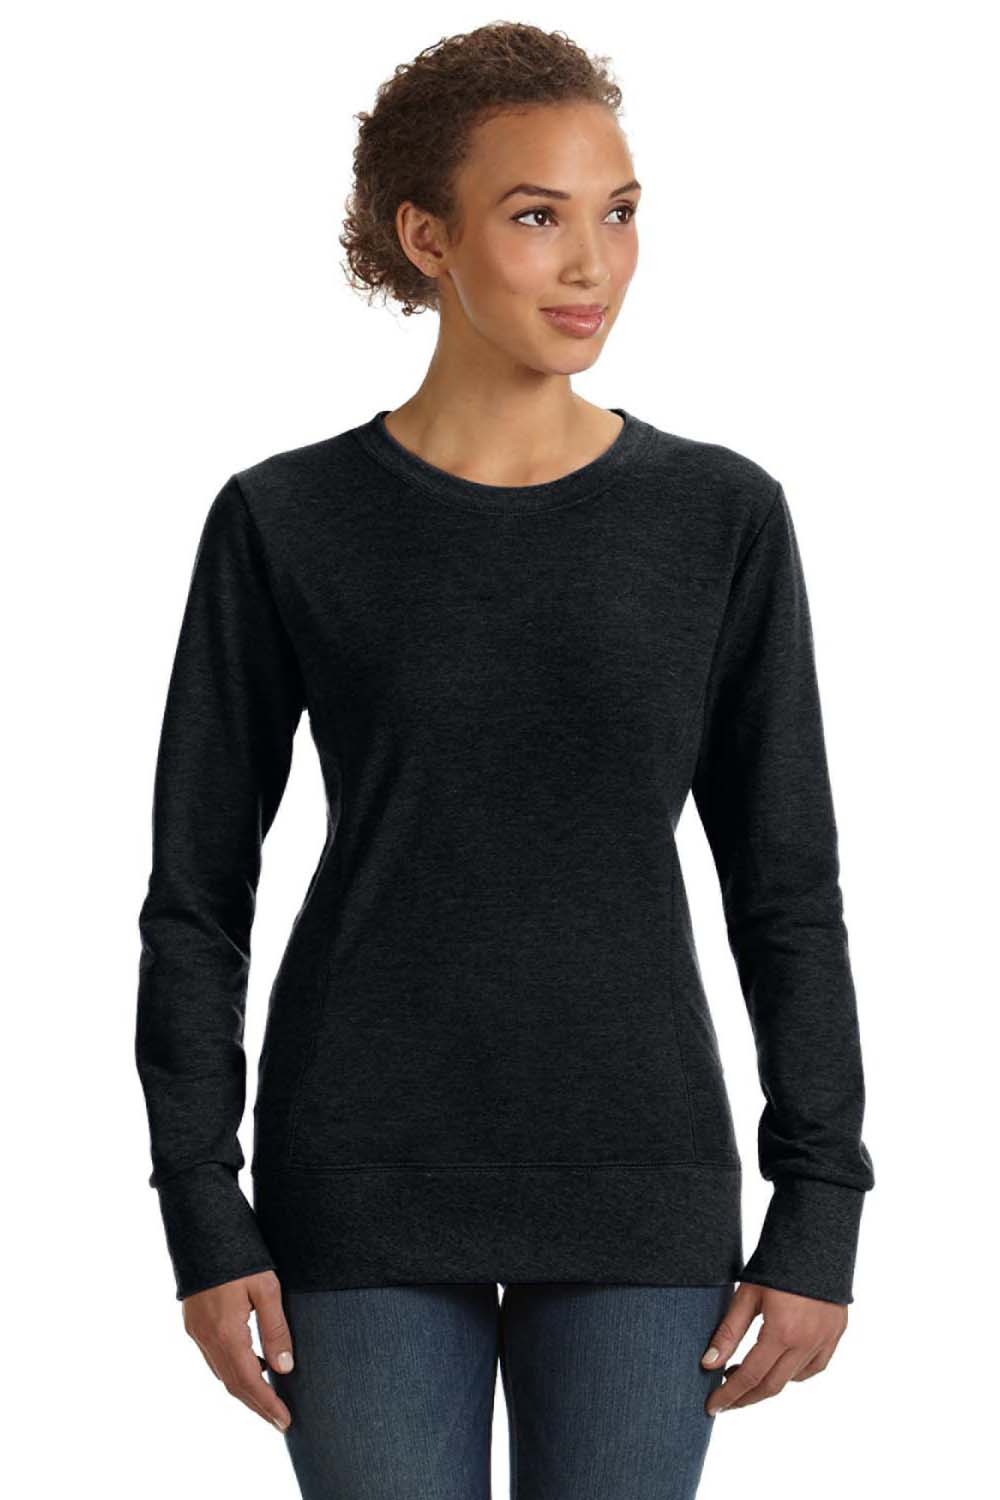 Anvil Womens French Terry Crewneck Sweatshirt 72000L - BigTopShirtShop.com